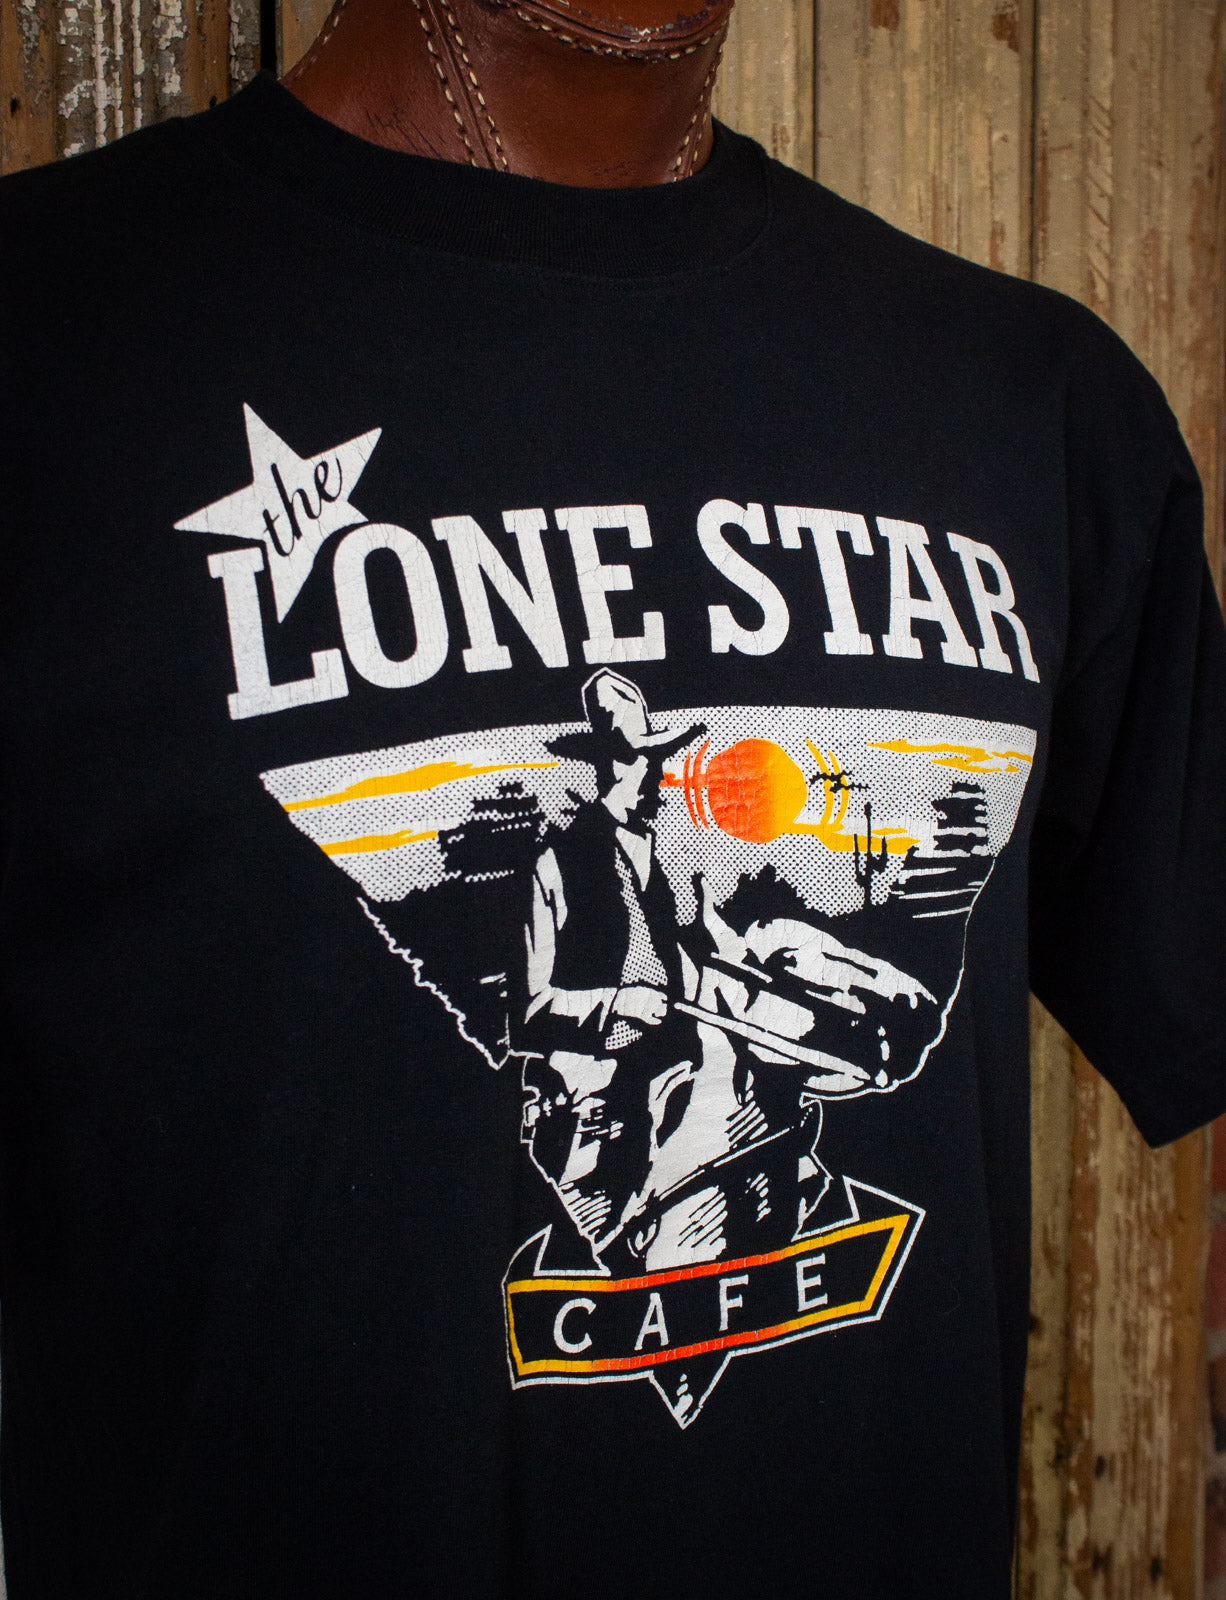 Vintage Lone Star Cafe Graphic T Shirt 90s Black Large